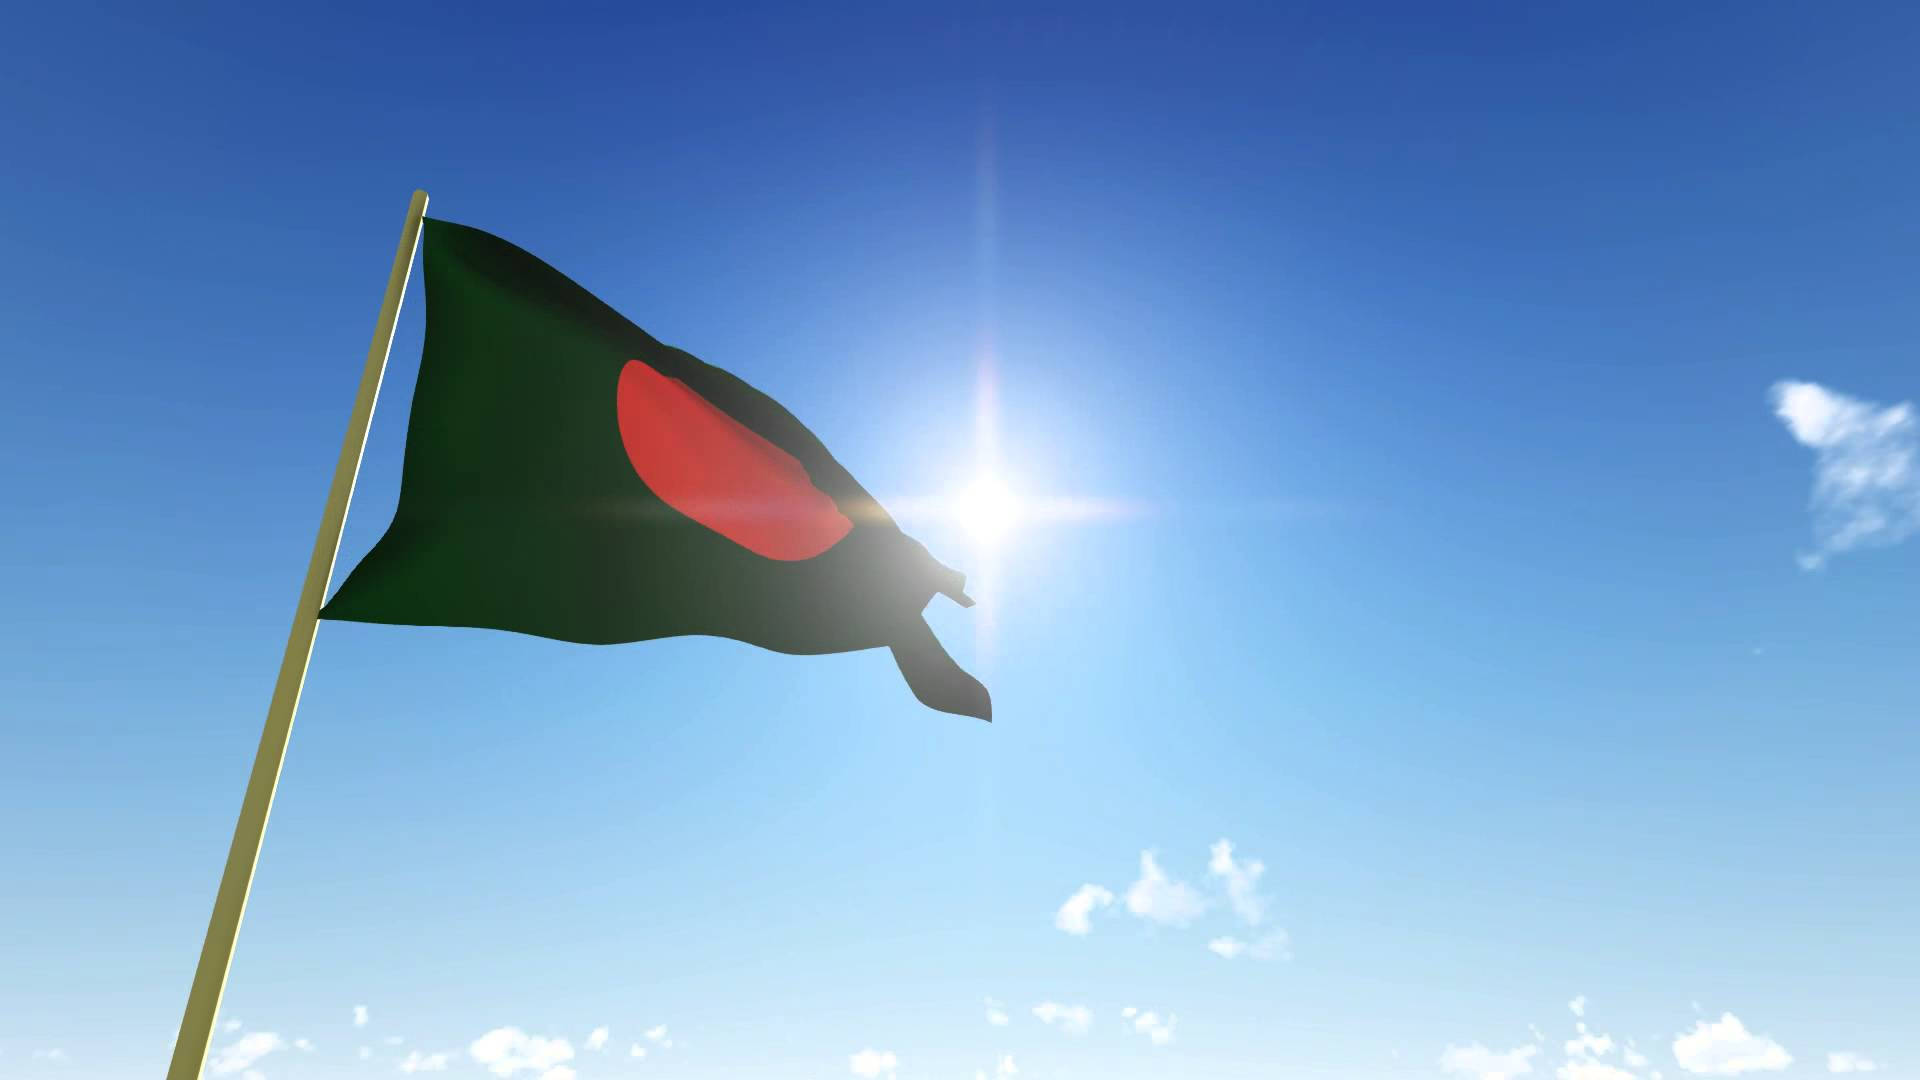 Bangladesh Flag In Flag Pole Wallpaper